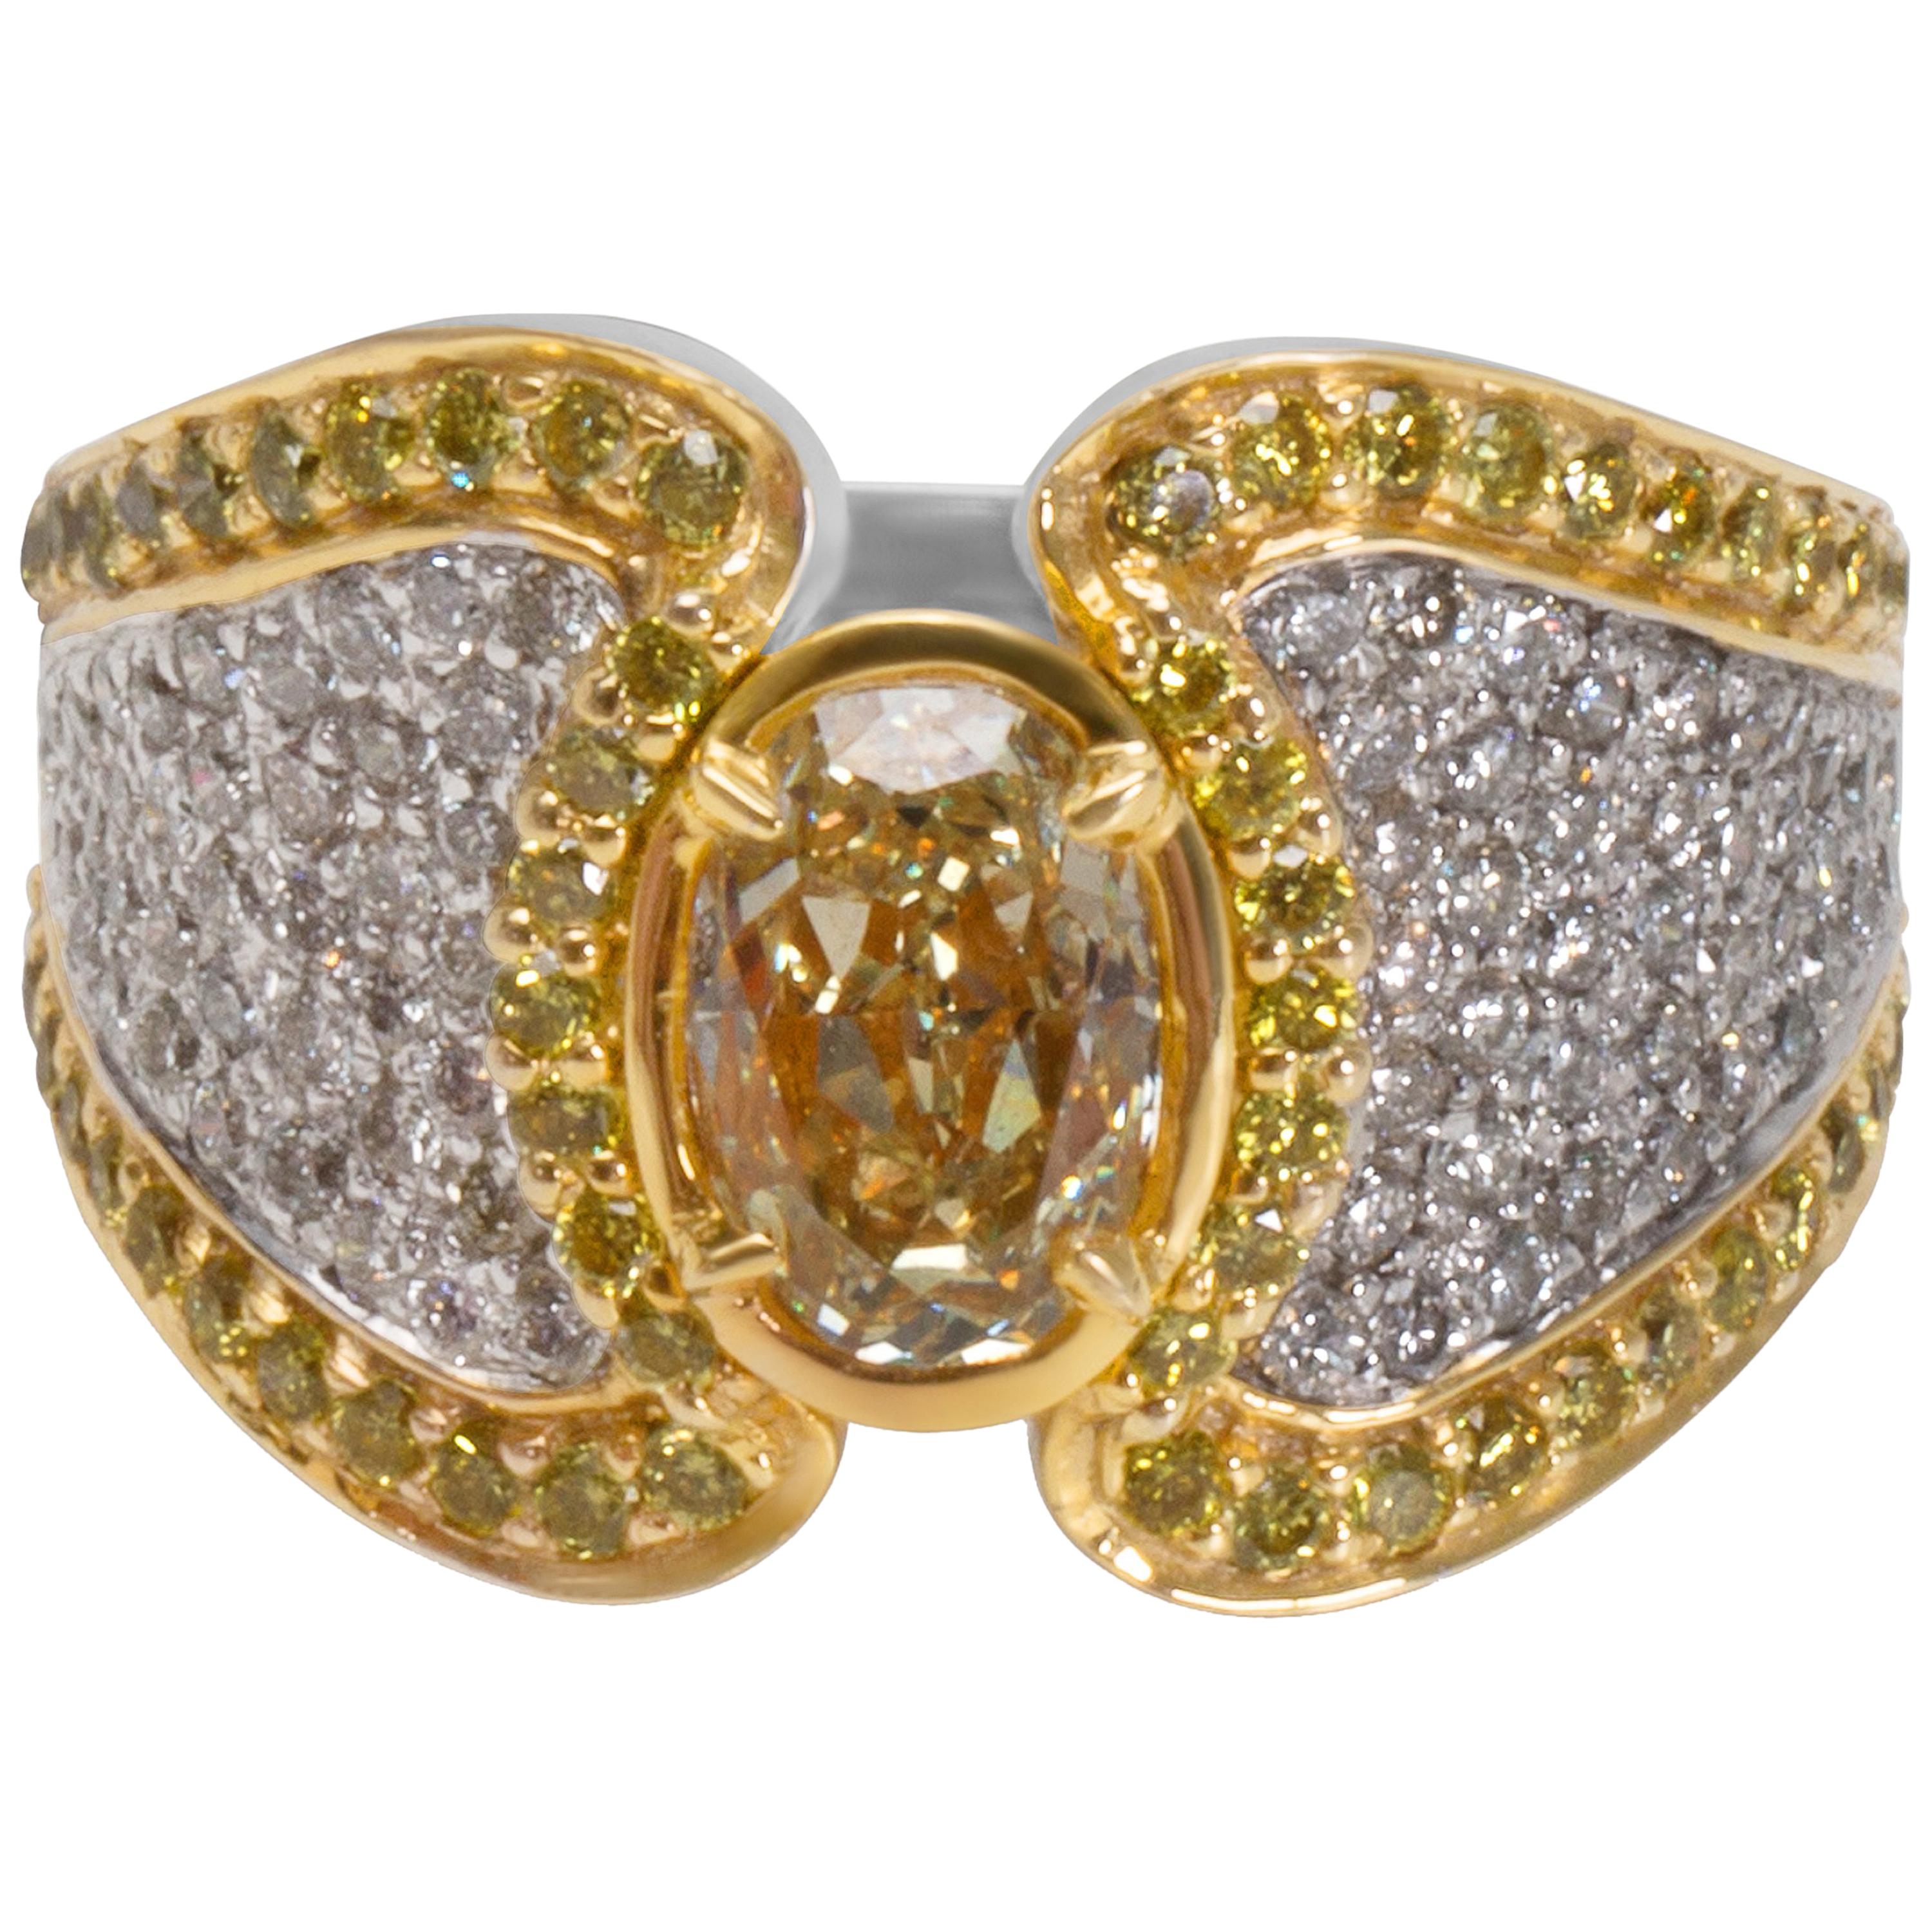 GIA Certified Fancy Yellow Oval Diamond Ring in 18 Karat Gold 1.02 Carat